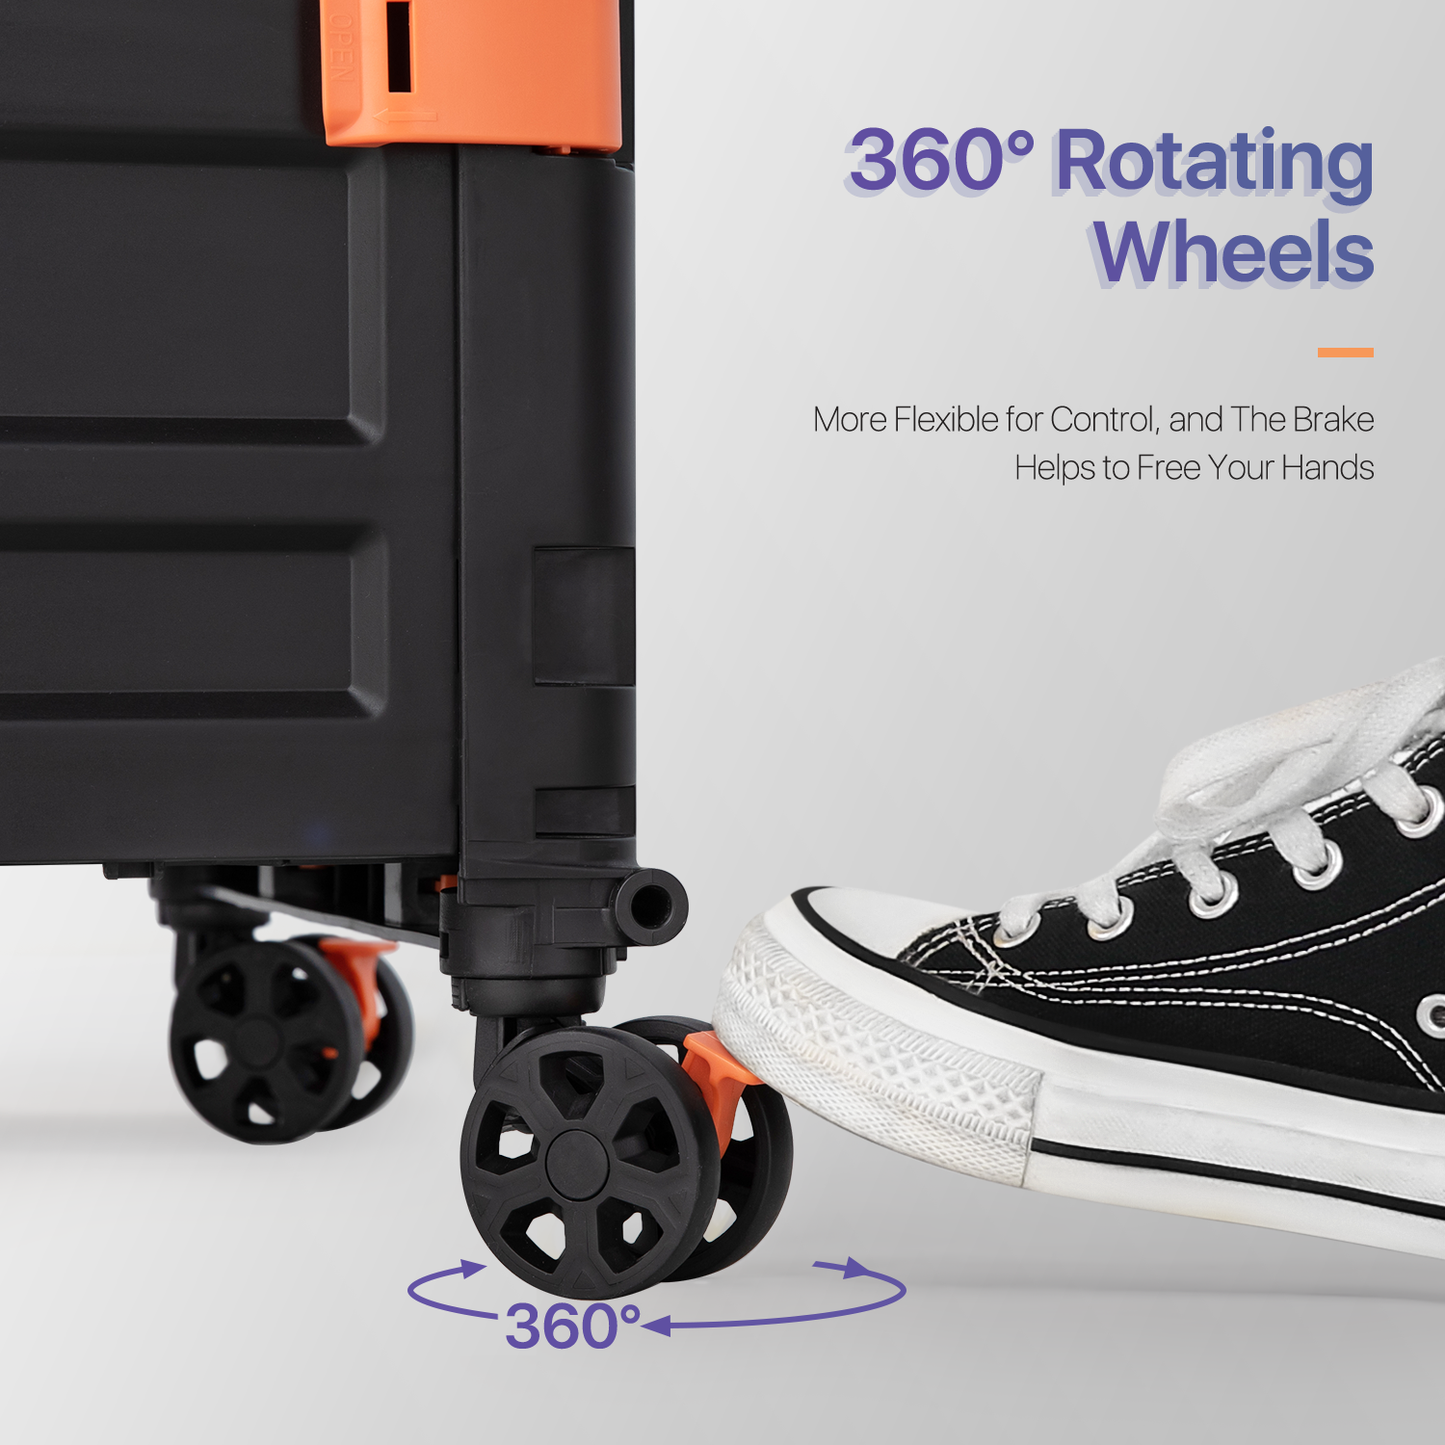 4-Wheeled Folding Shopping Cart w/Swivel Caster - 55 Litre